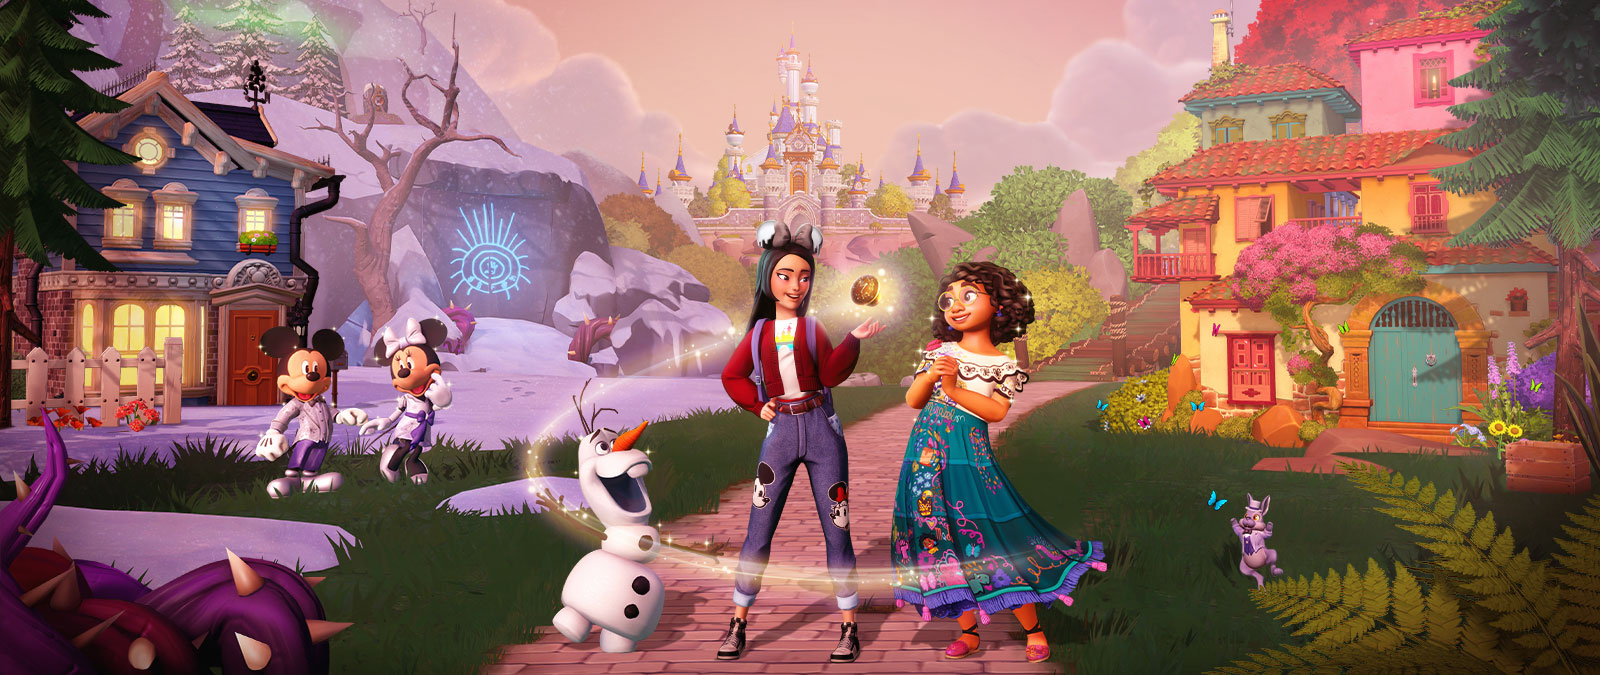 Disney Dreamlight Valley | Xbox